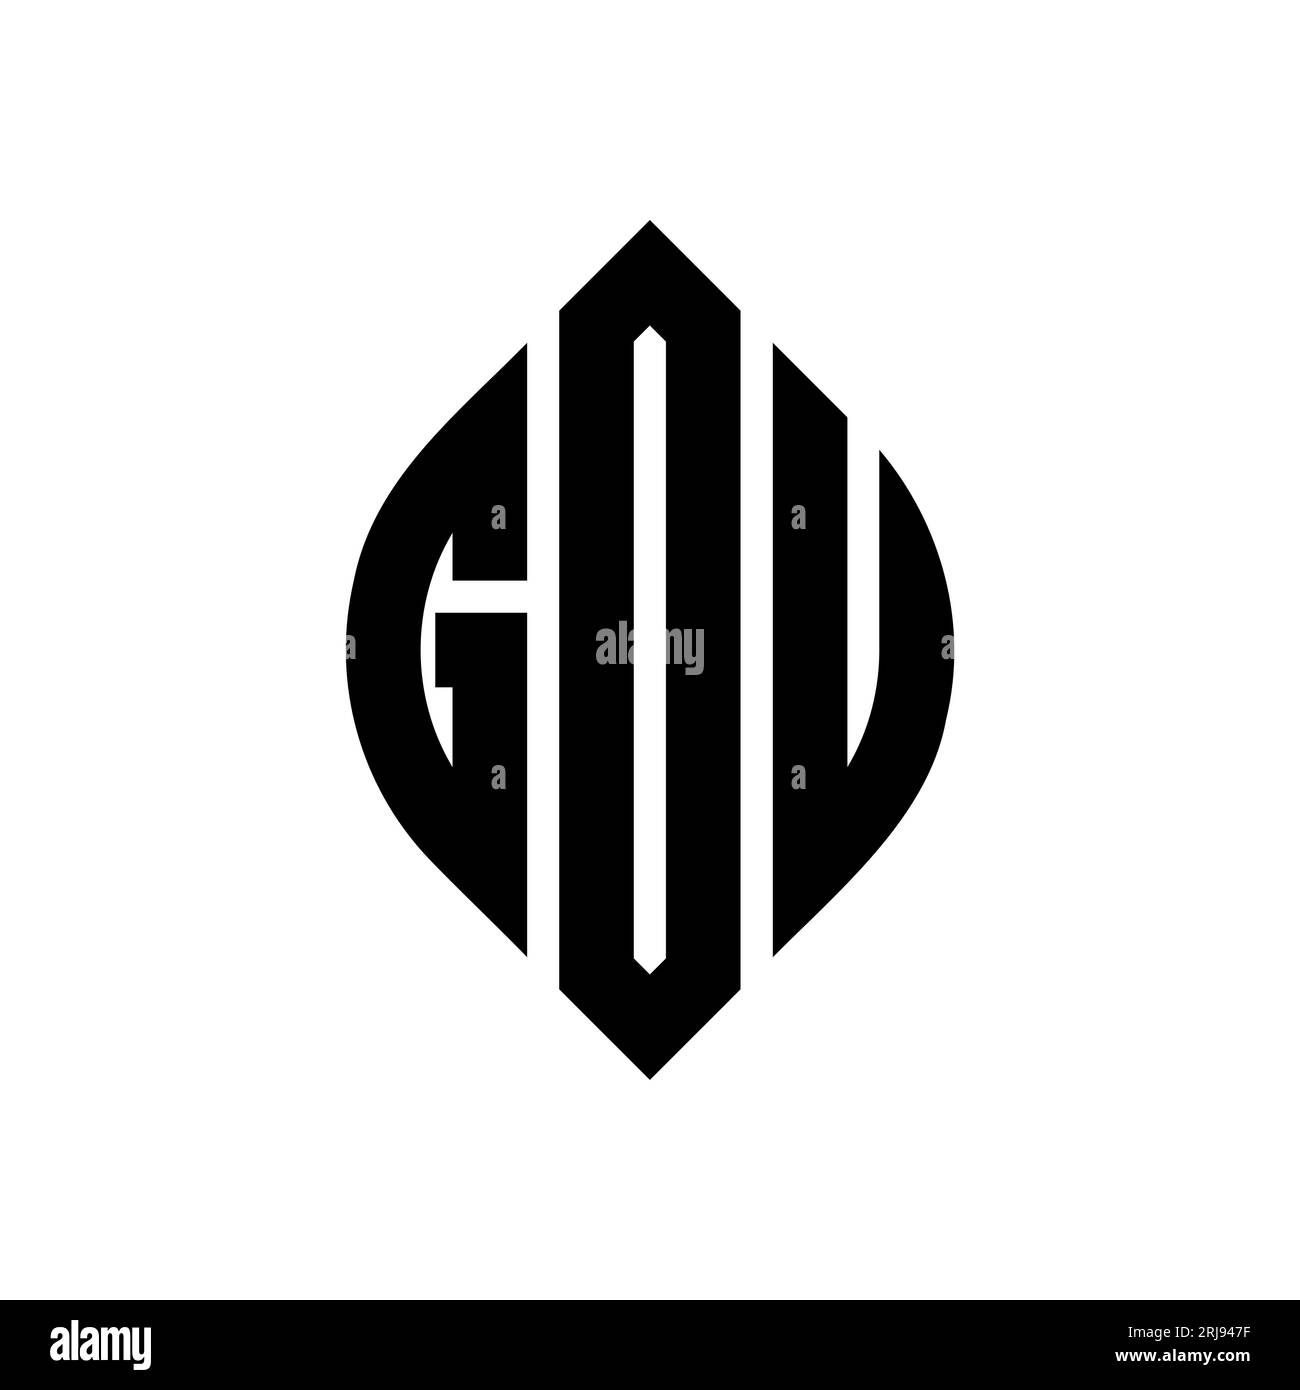 Gdu circle logo hi-res stock photography and images - Alamy